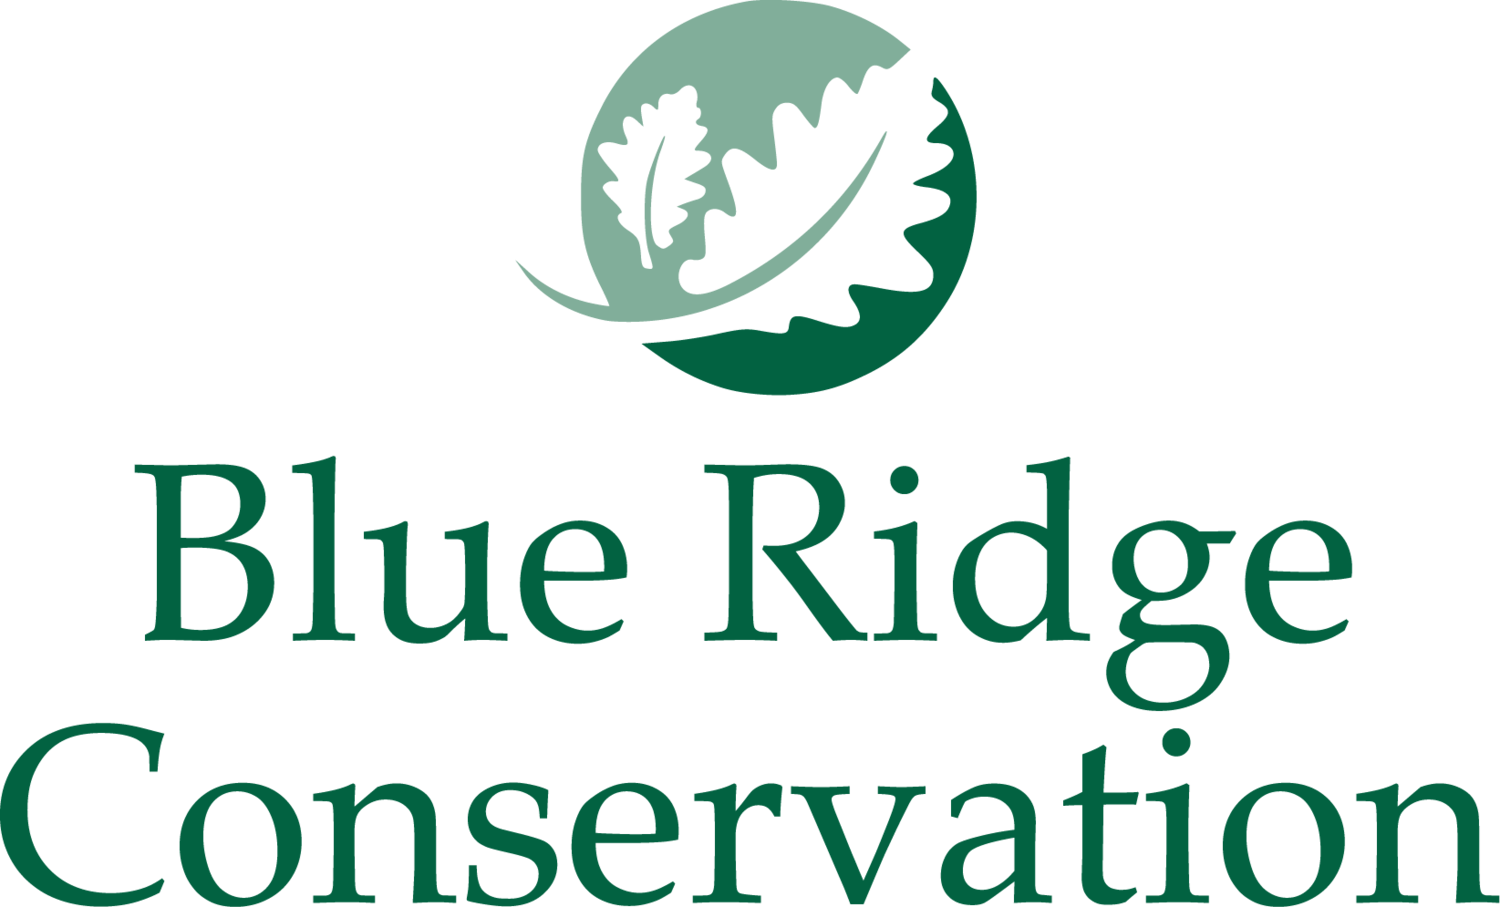 Blue Ridge Conservation